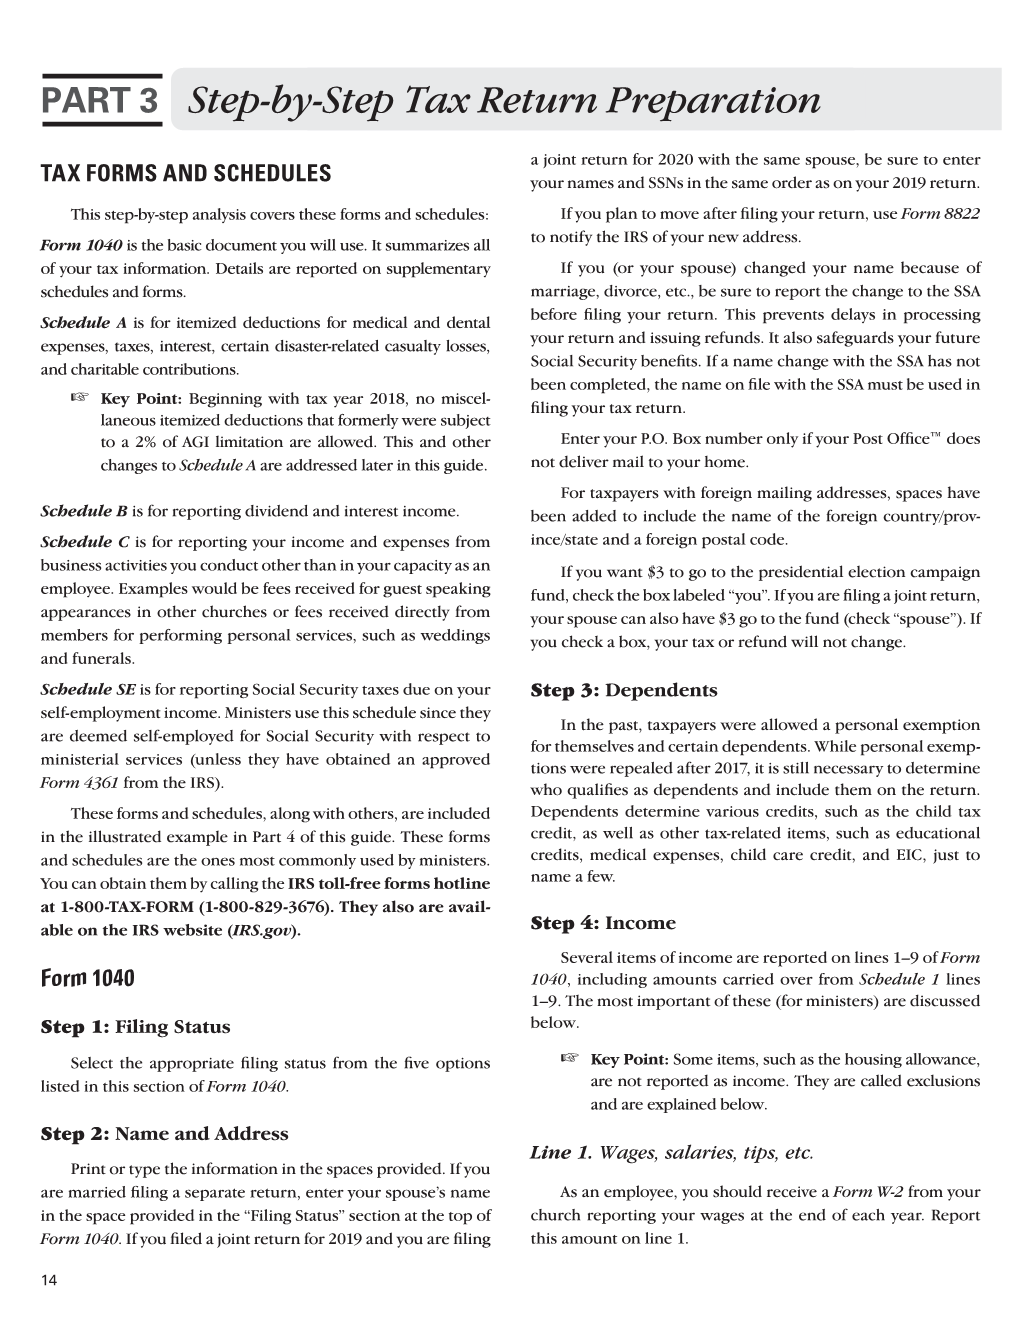 PART 3 Step-By-Step Tax Return Preparation